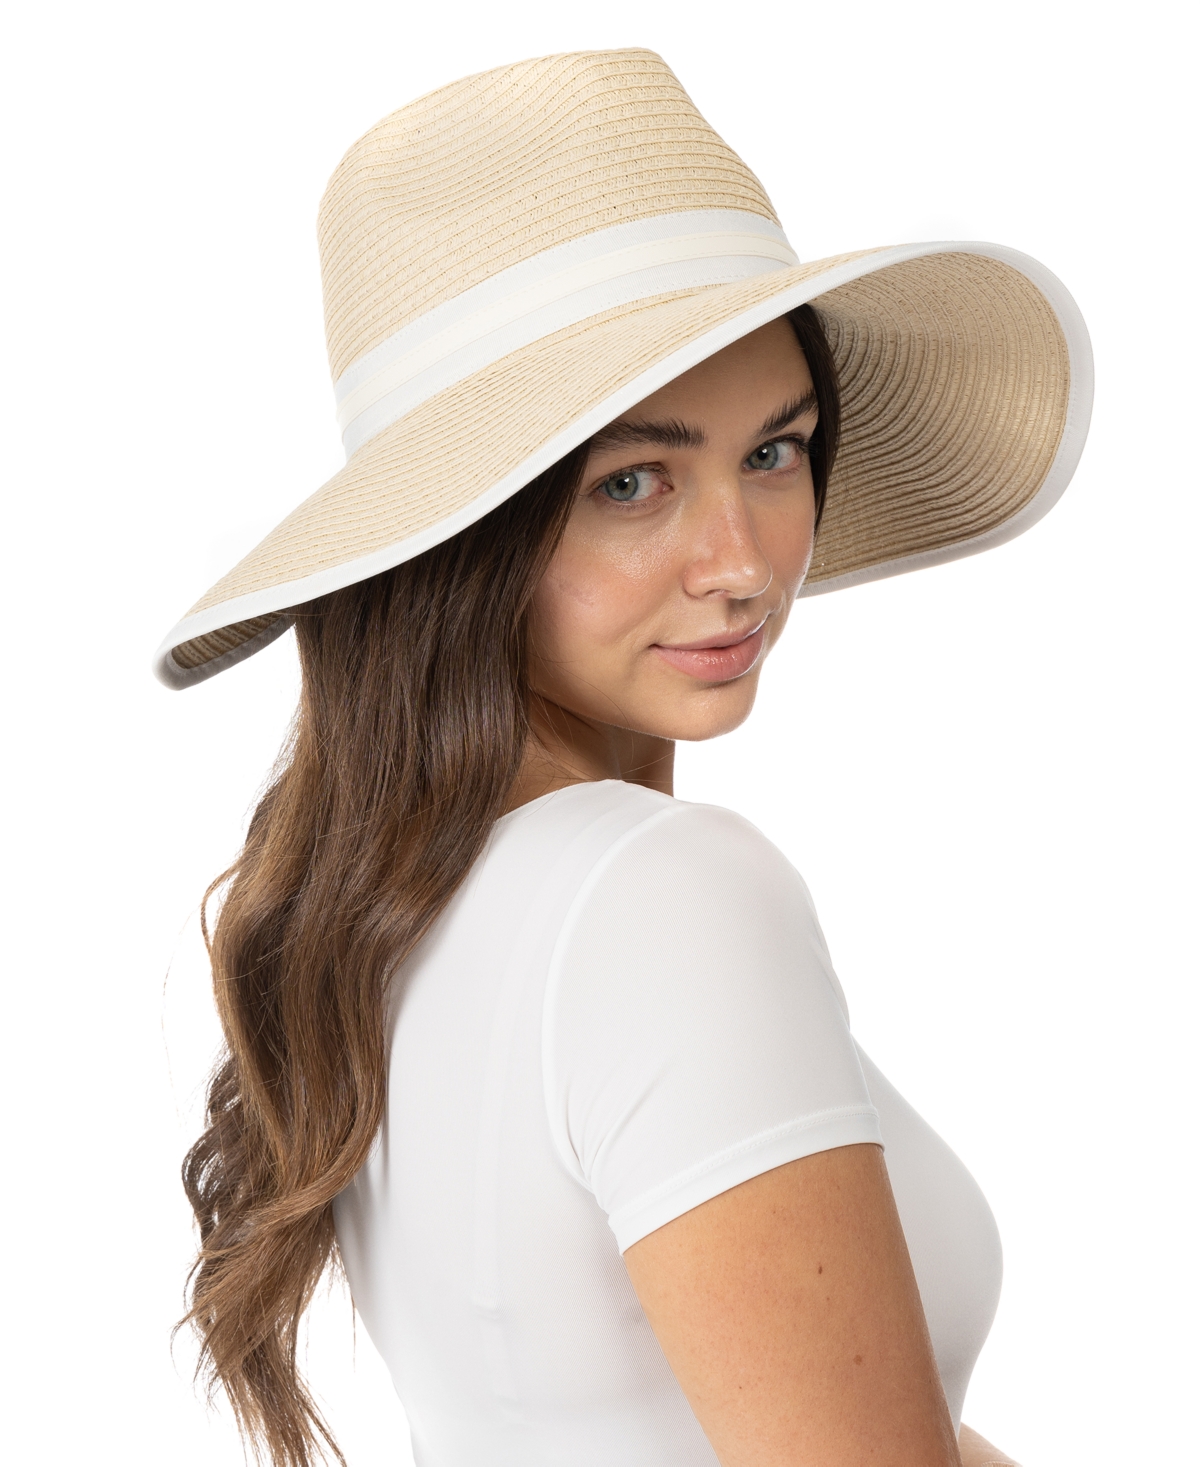 Giani Bernini Women's Panama Crown Face Framer Straw Hat